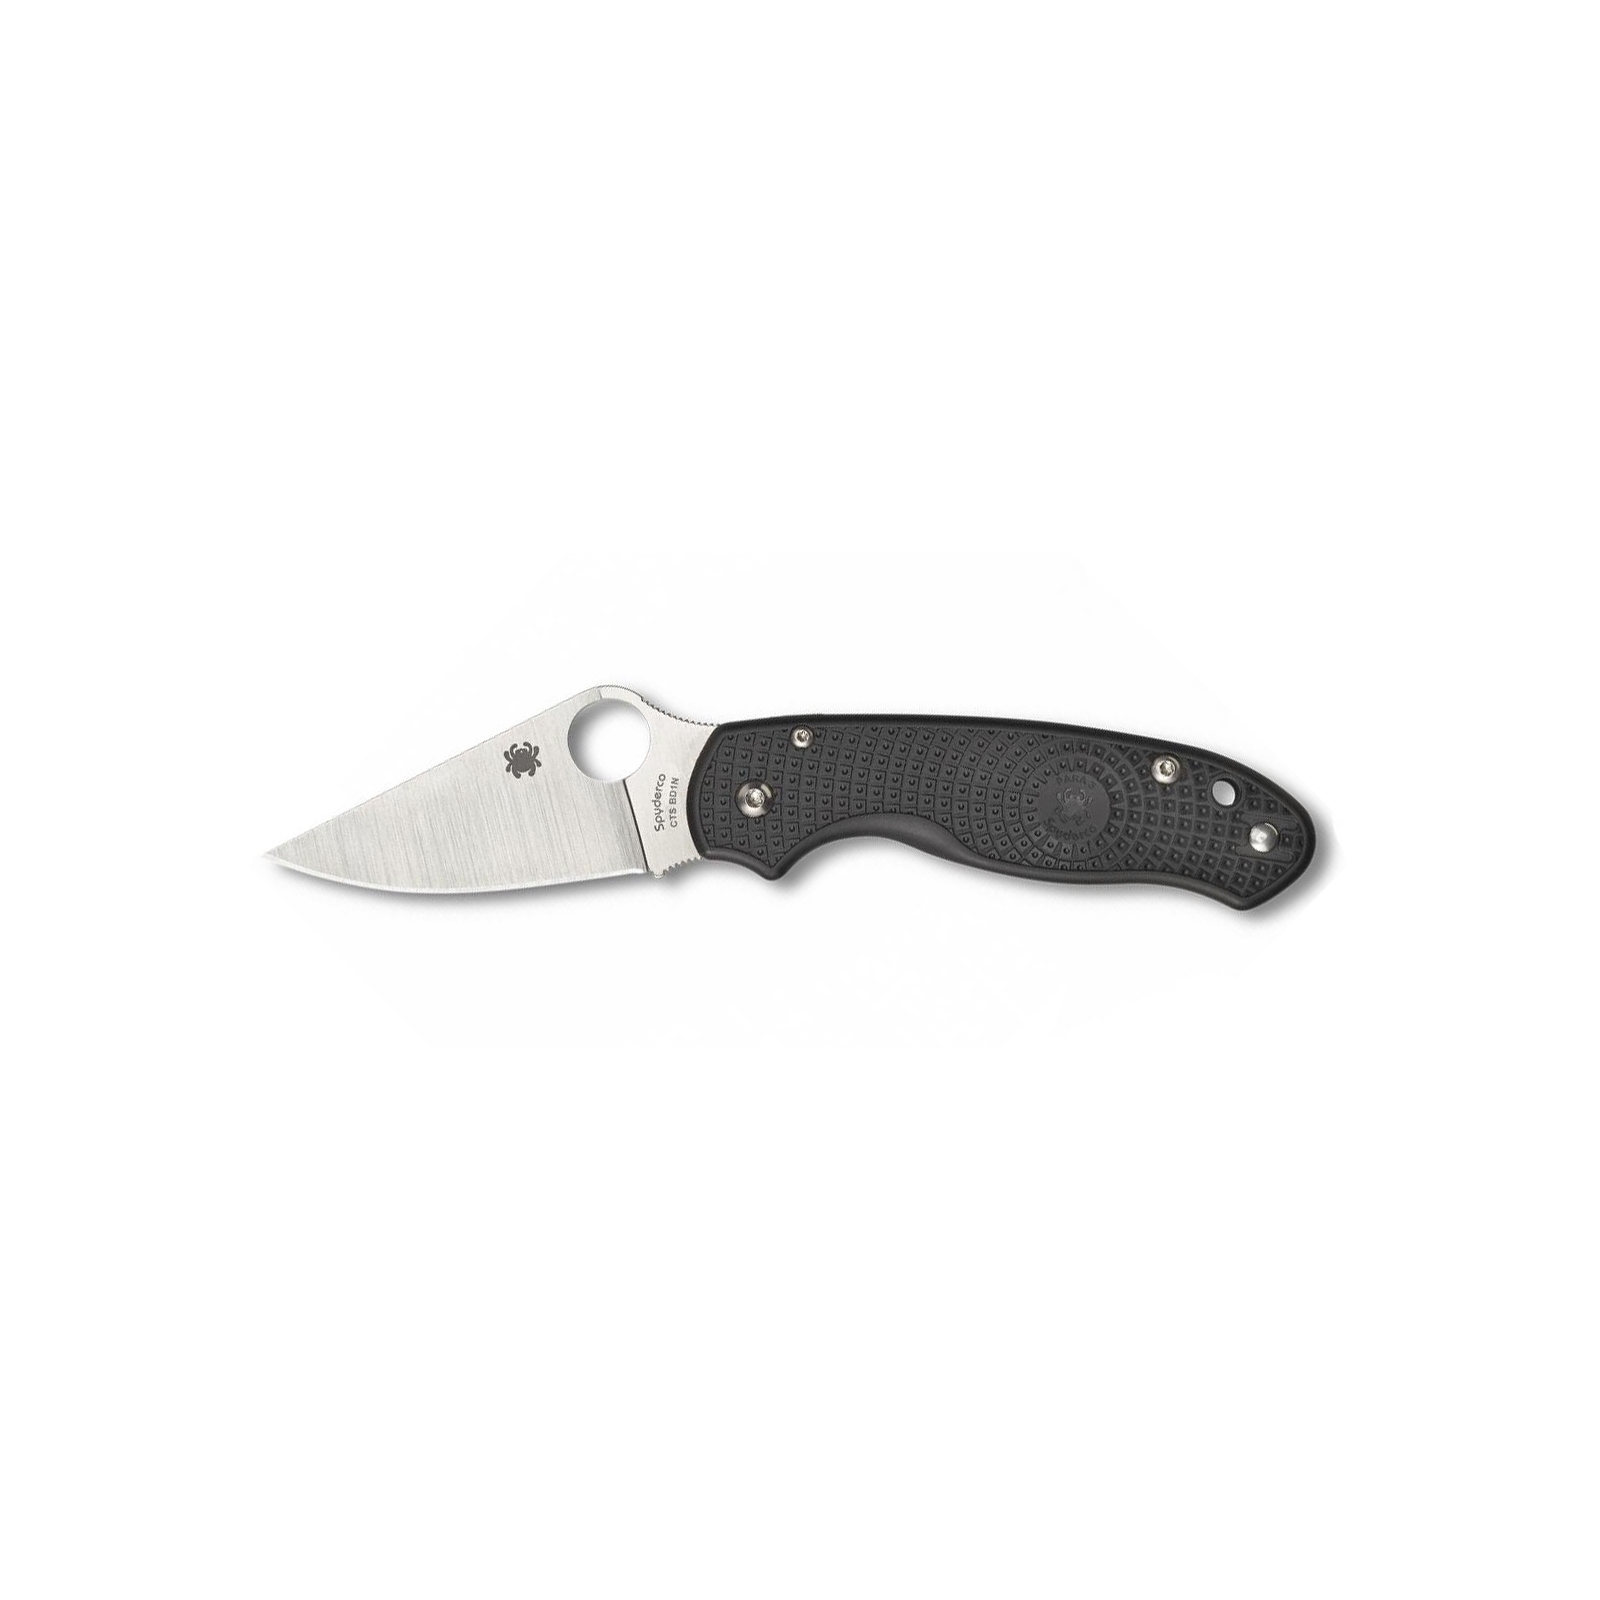 Нож Spyderco Para 3, FRN (C223PBK)